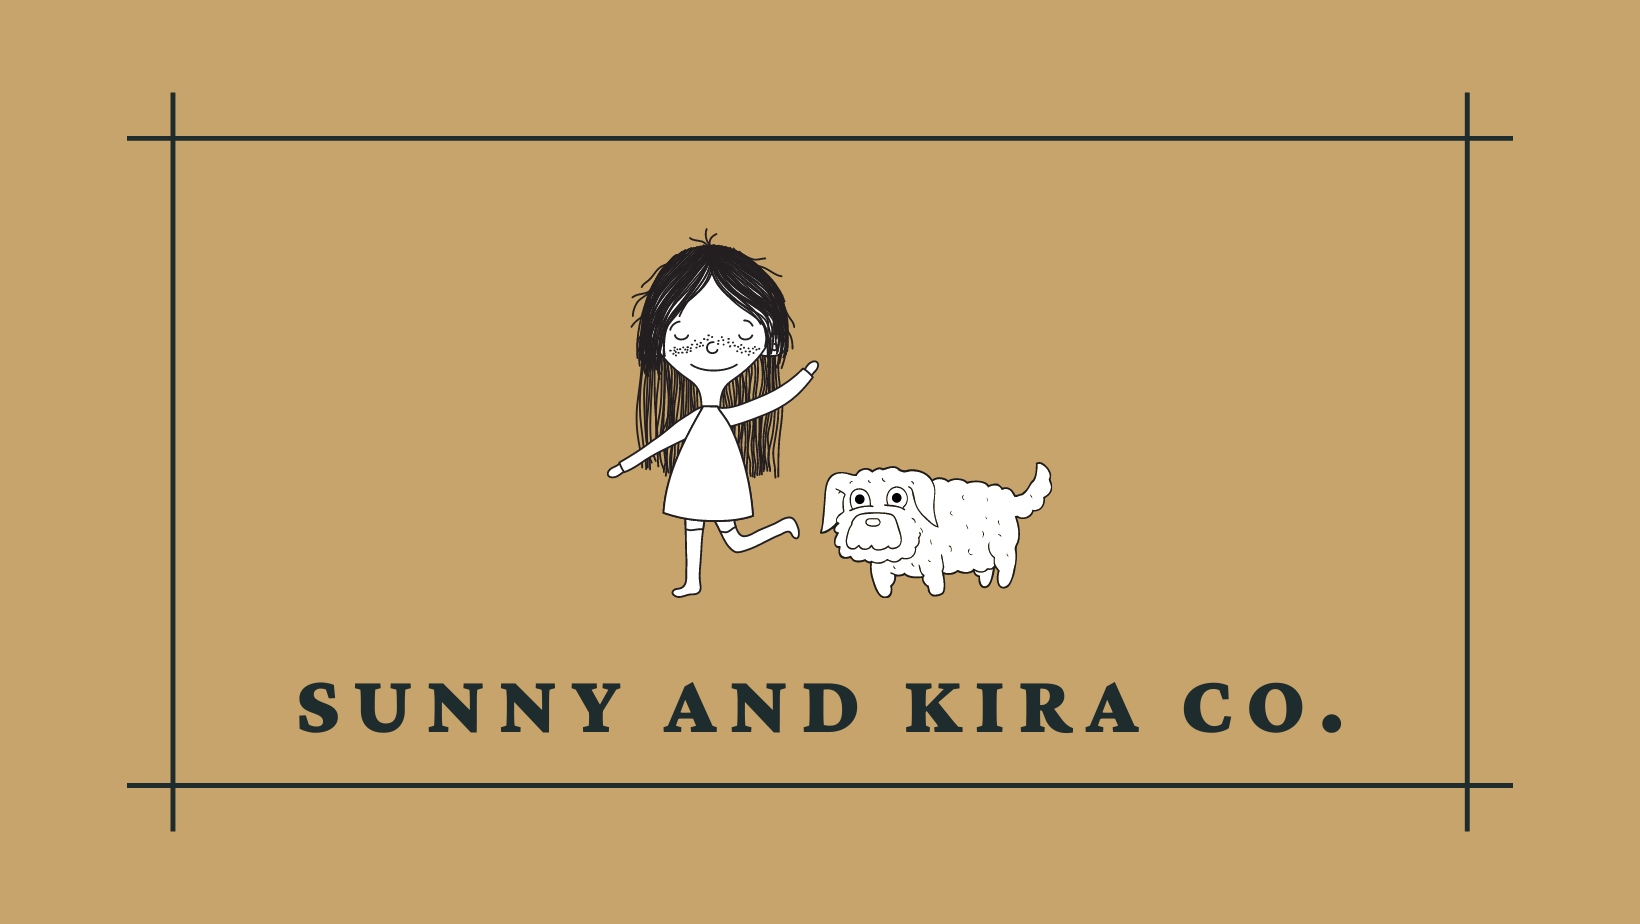 Sunny and Kira Co.